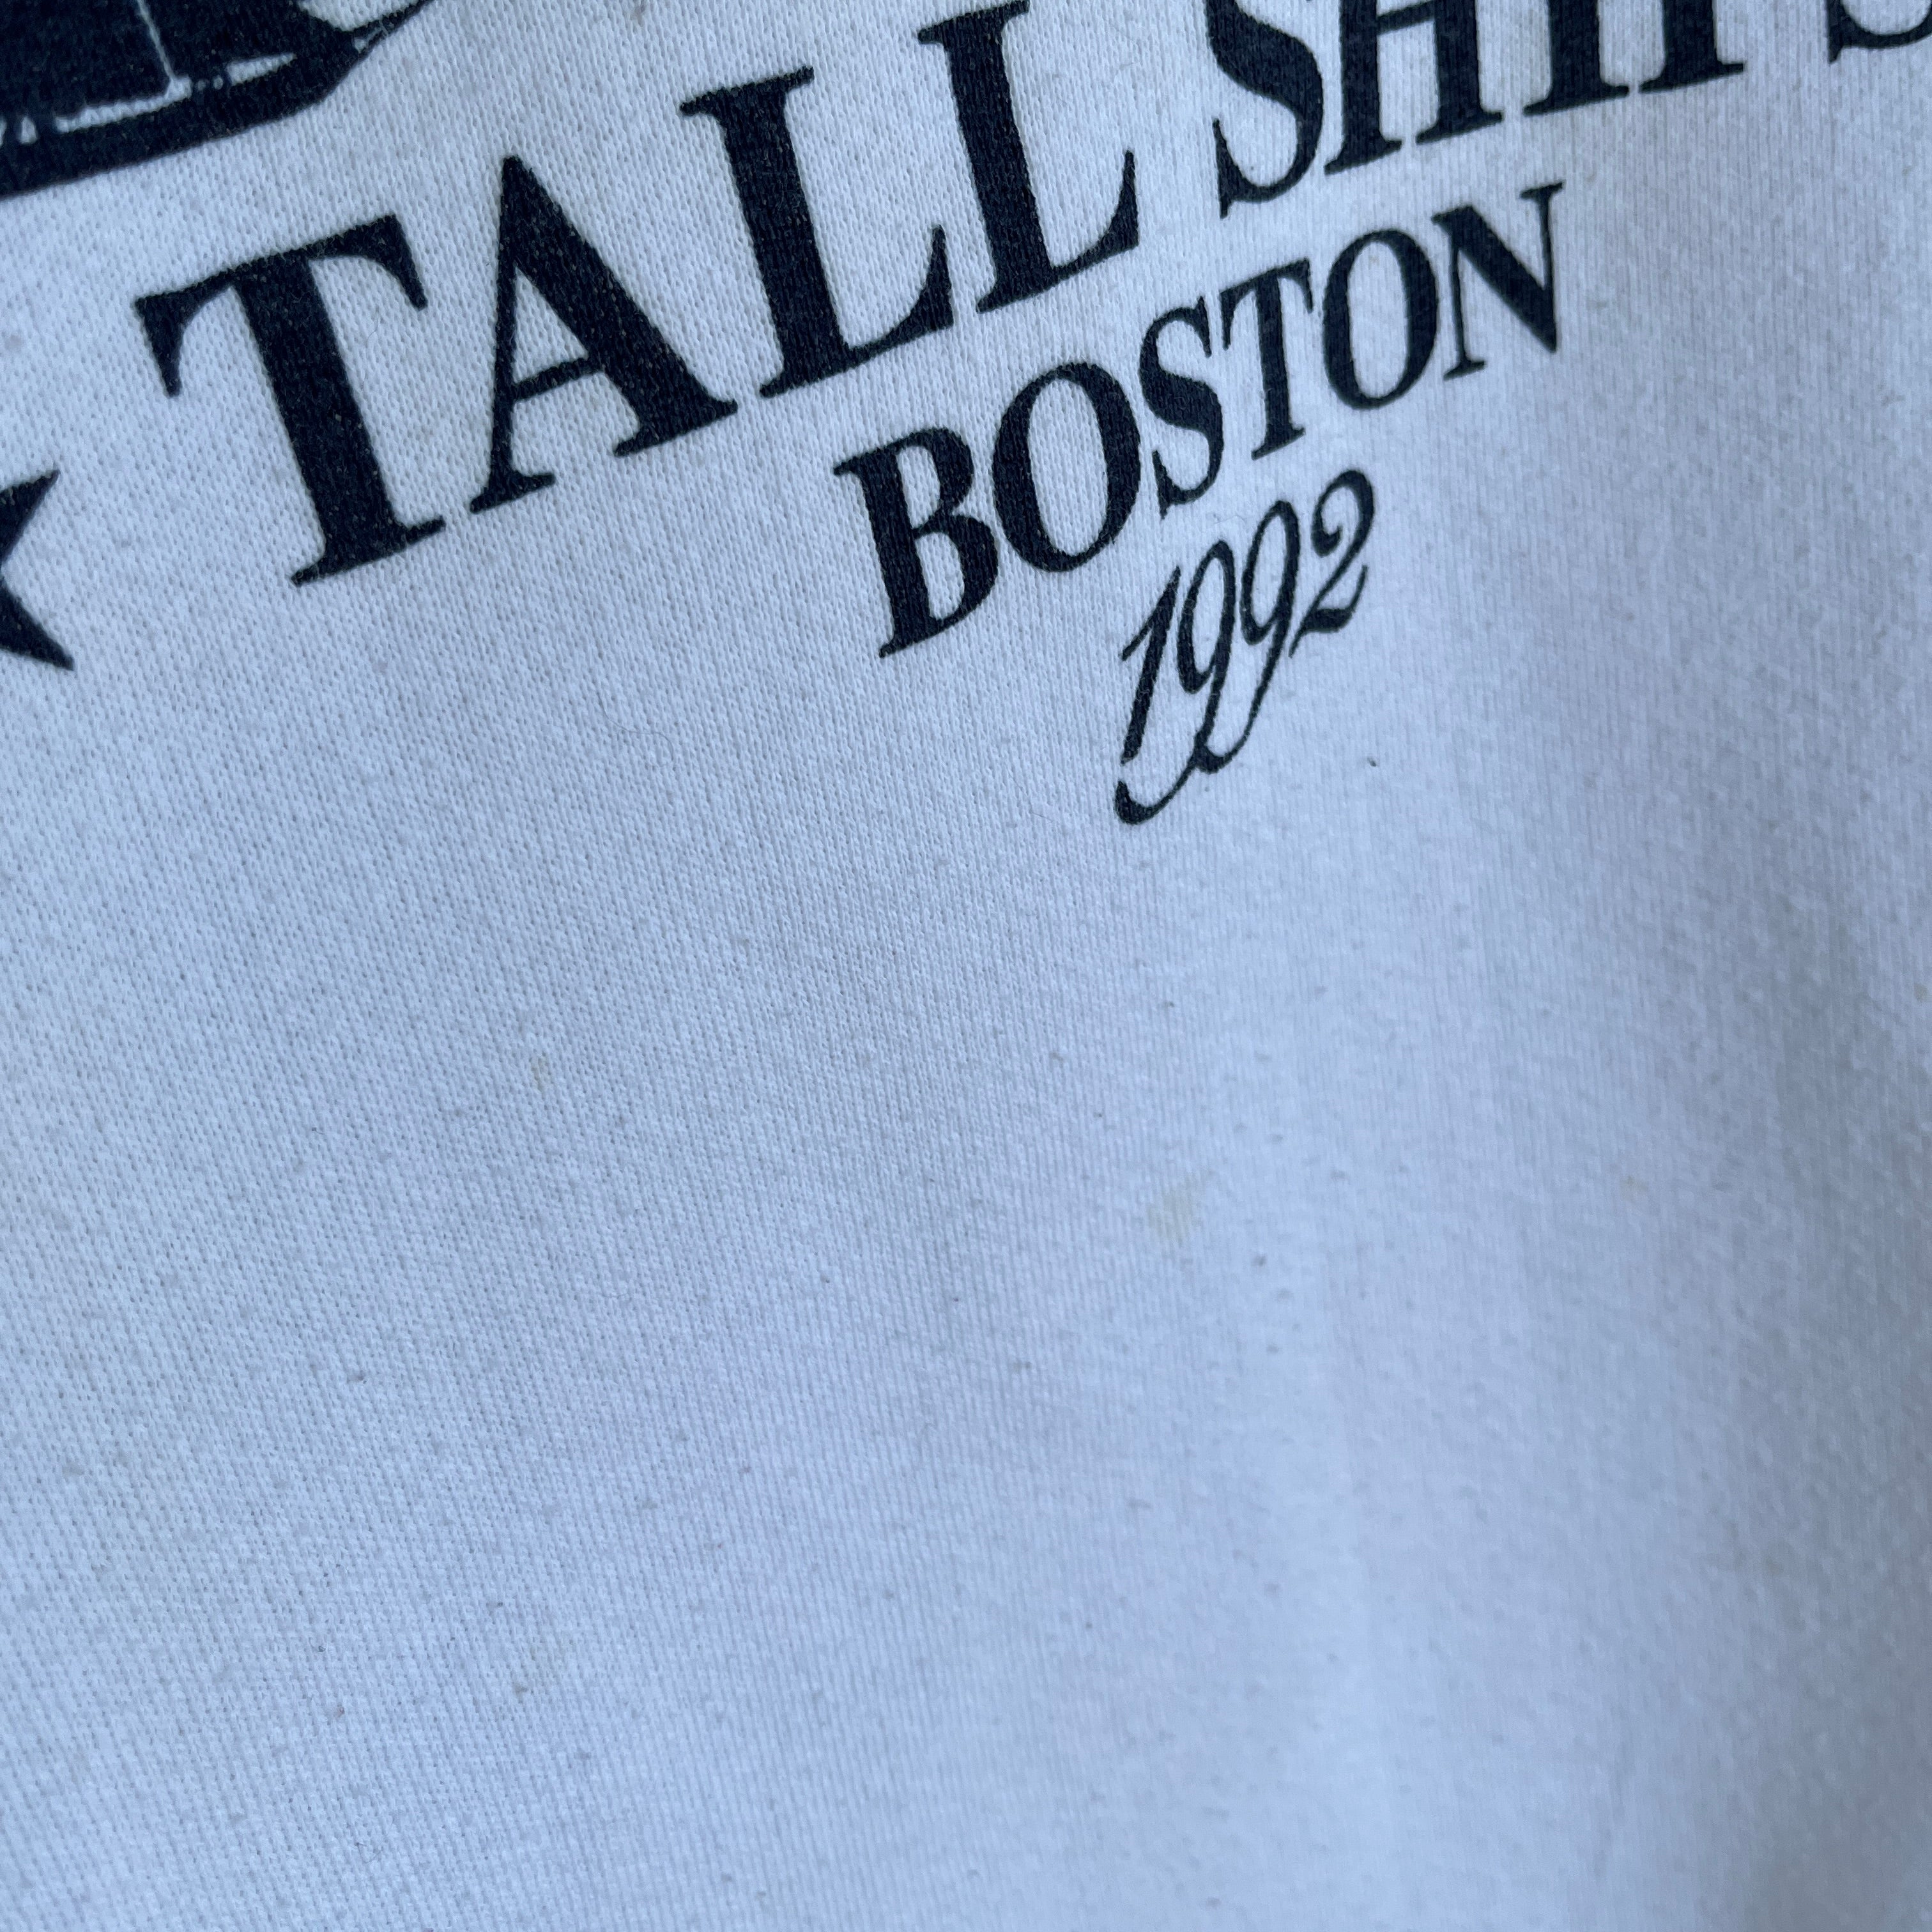 1992 Tall Ships, Boston, Sweatshirt